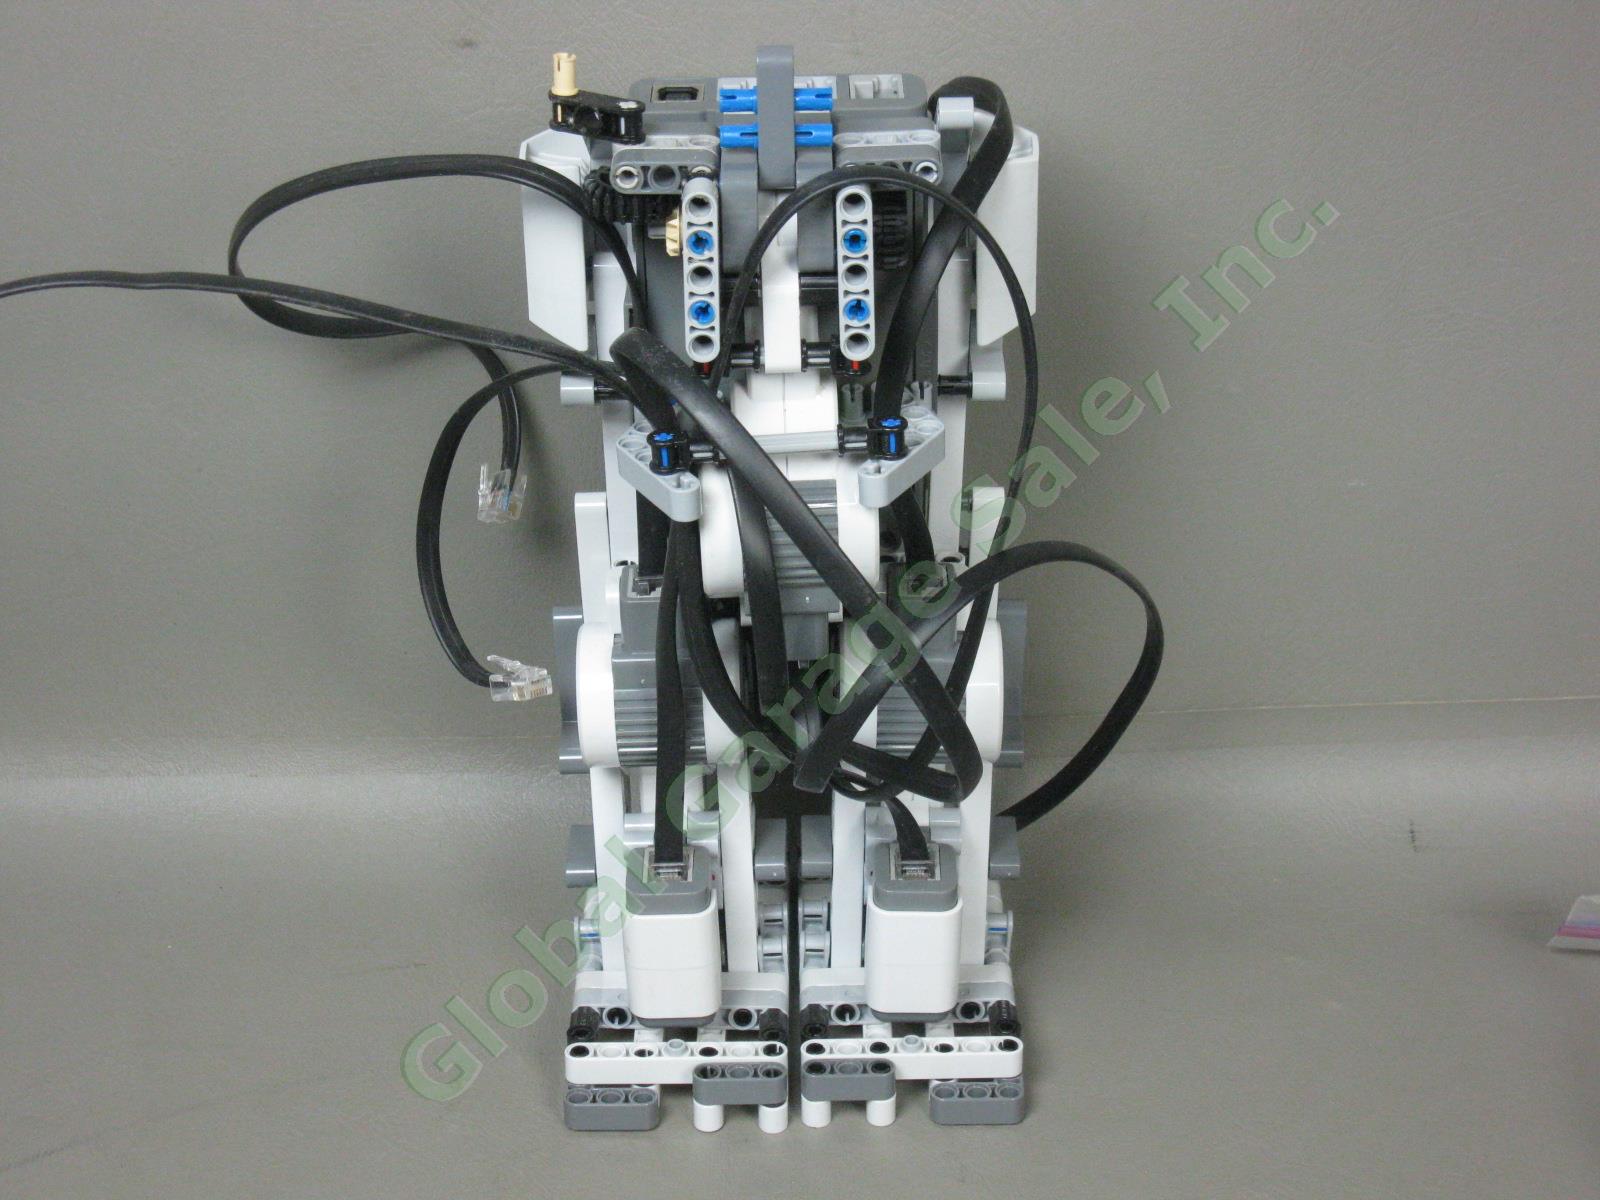 Lego Mindstorms NXT 2.0 8547 Robot Building Set Windows/Mac w/Original Box NR! 3